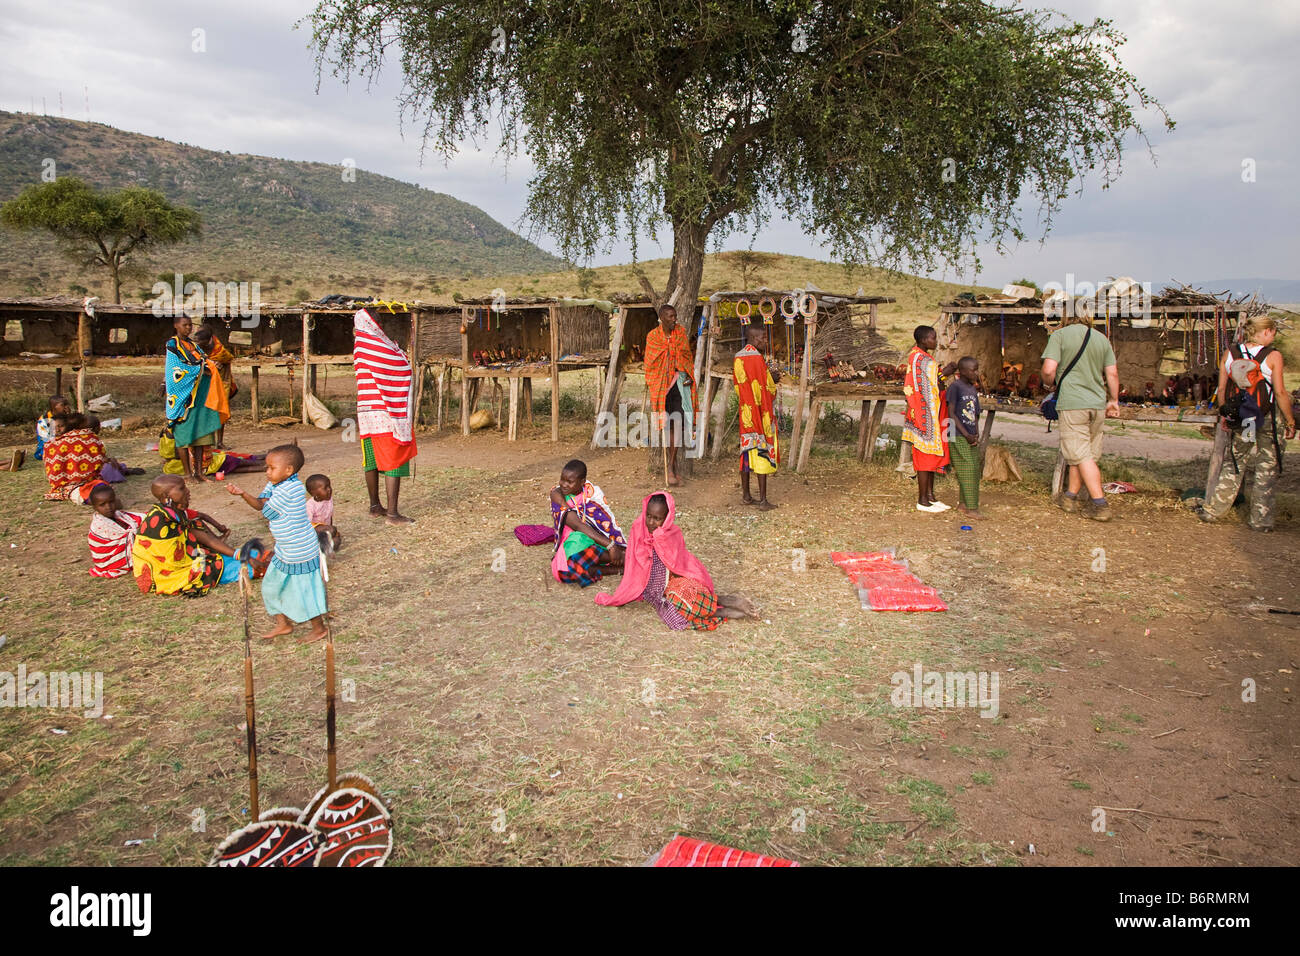 Village near Masai Mara Game Park Kenya Africa Stock Photo